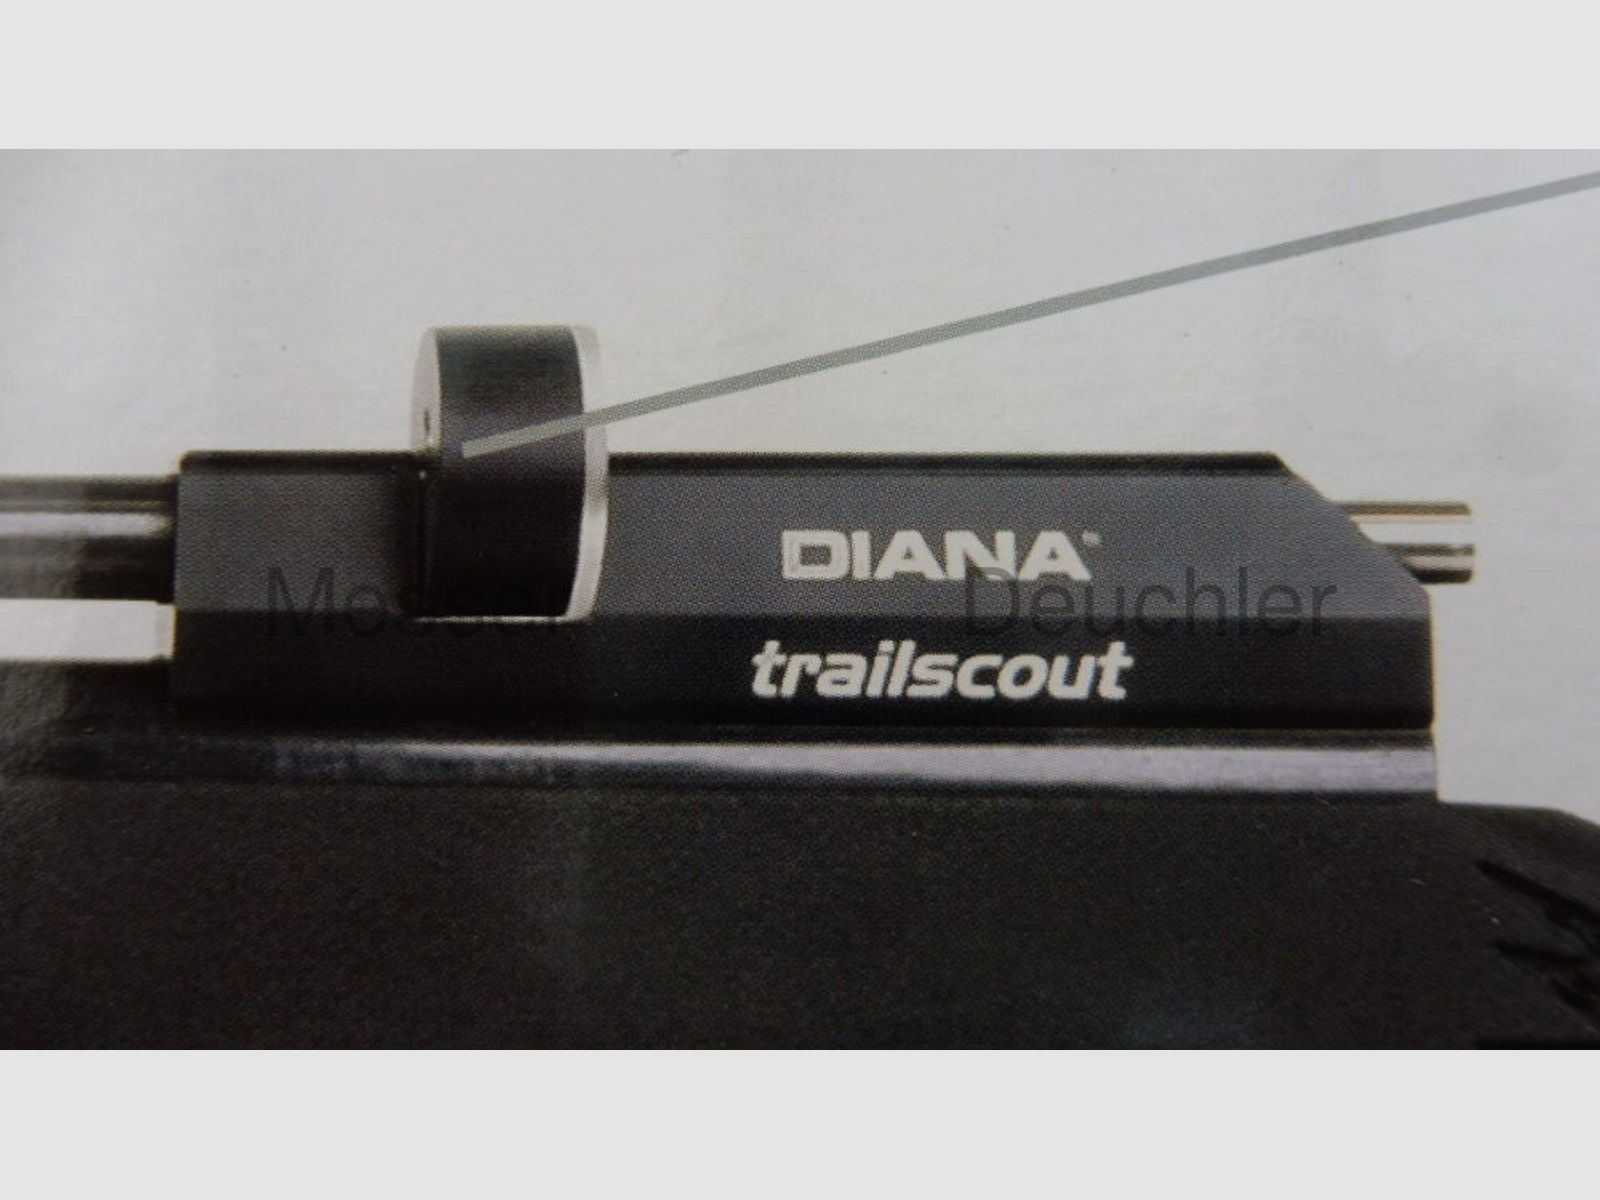 Diana trailscout	 Diana trailscout montiert mit ZFR 4x32